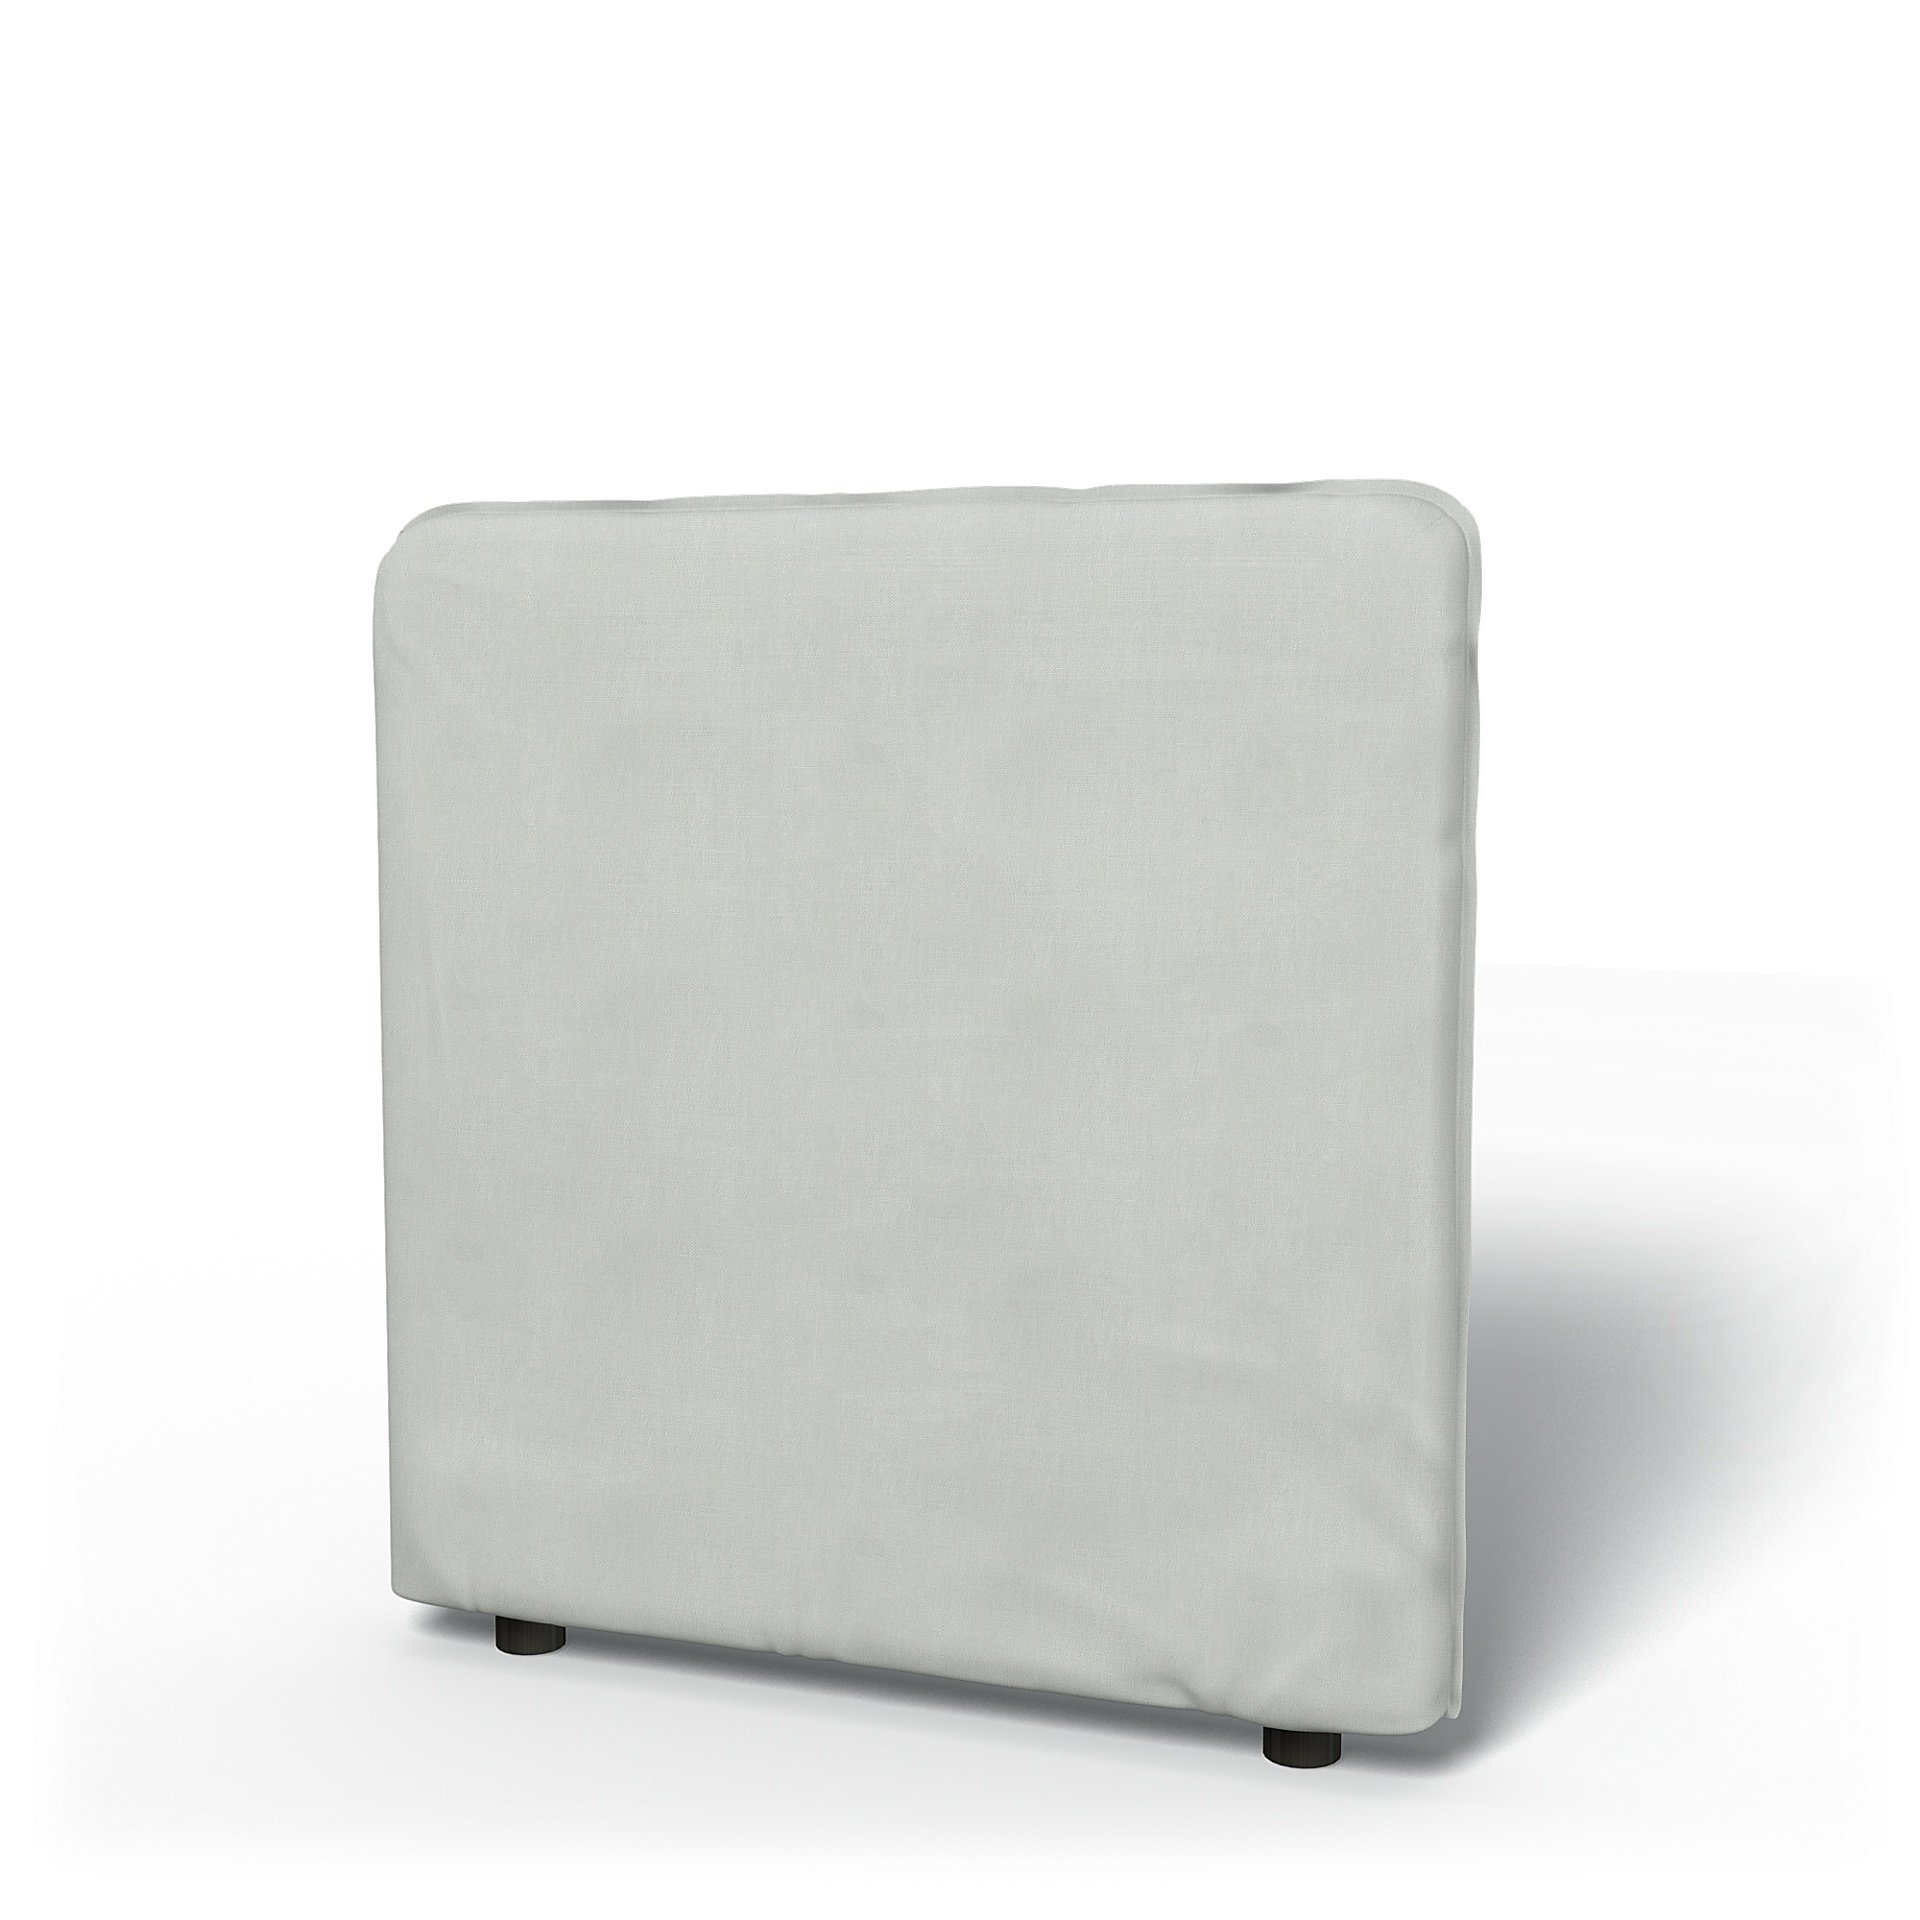 IKEA - Vallentuna Low Backrest Cover 80x80cm 32x32in, Silver Grey, Linen - Bemz